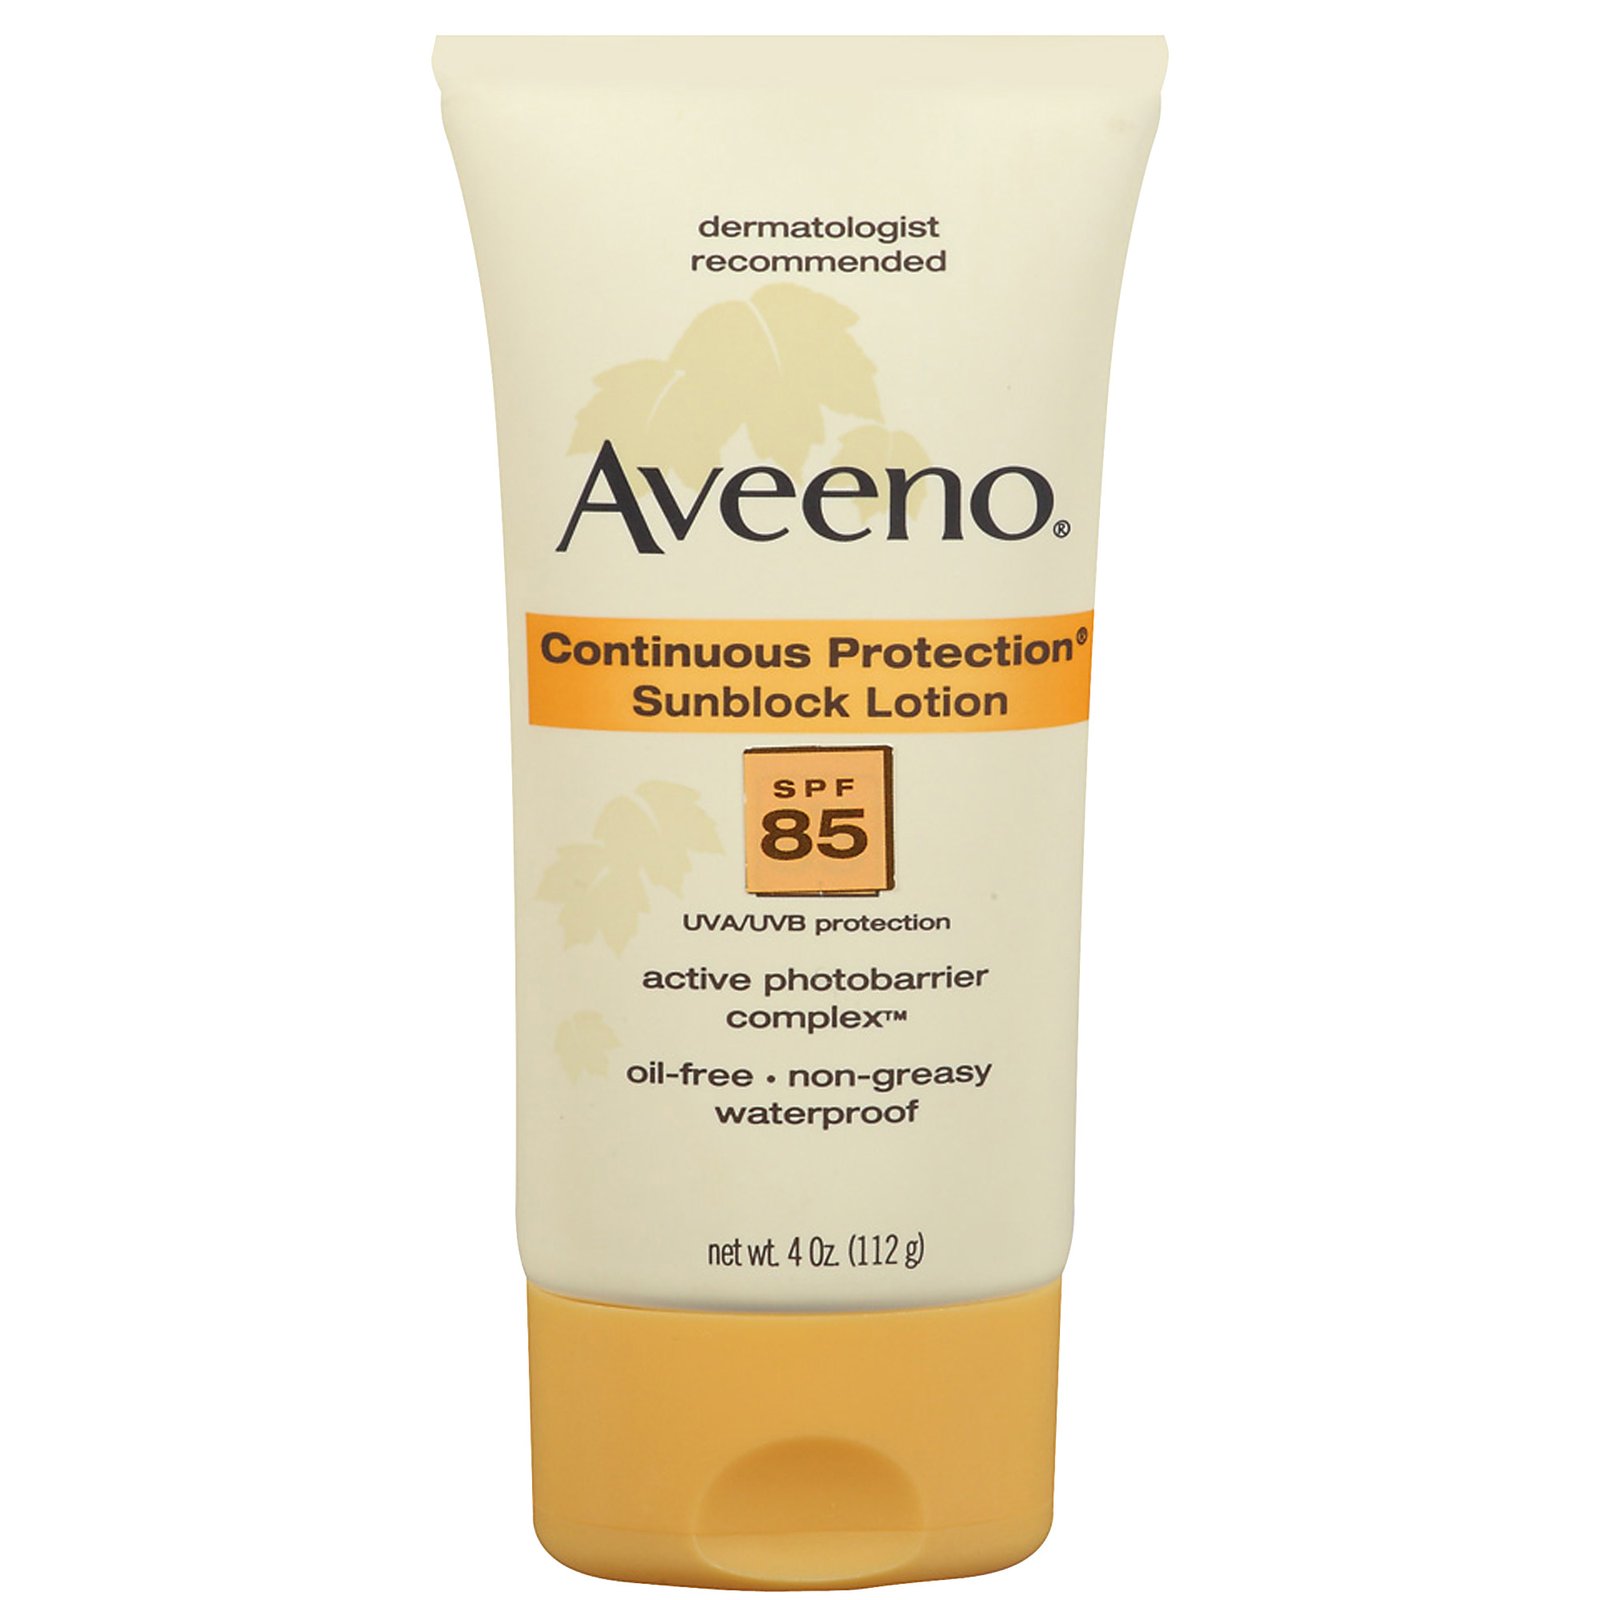 Aveeno sunblock lotion SPF 85